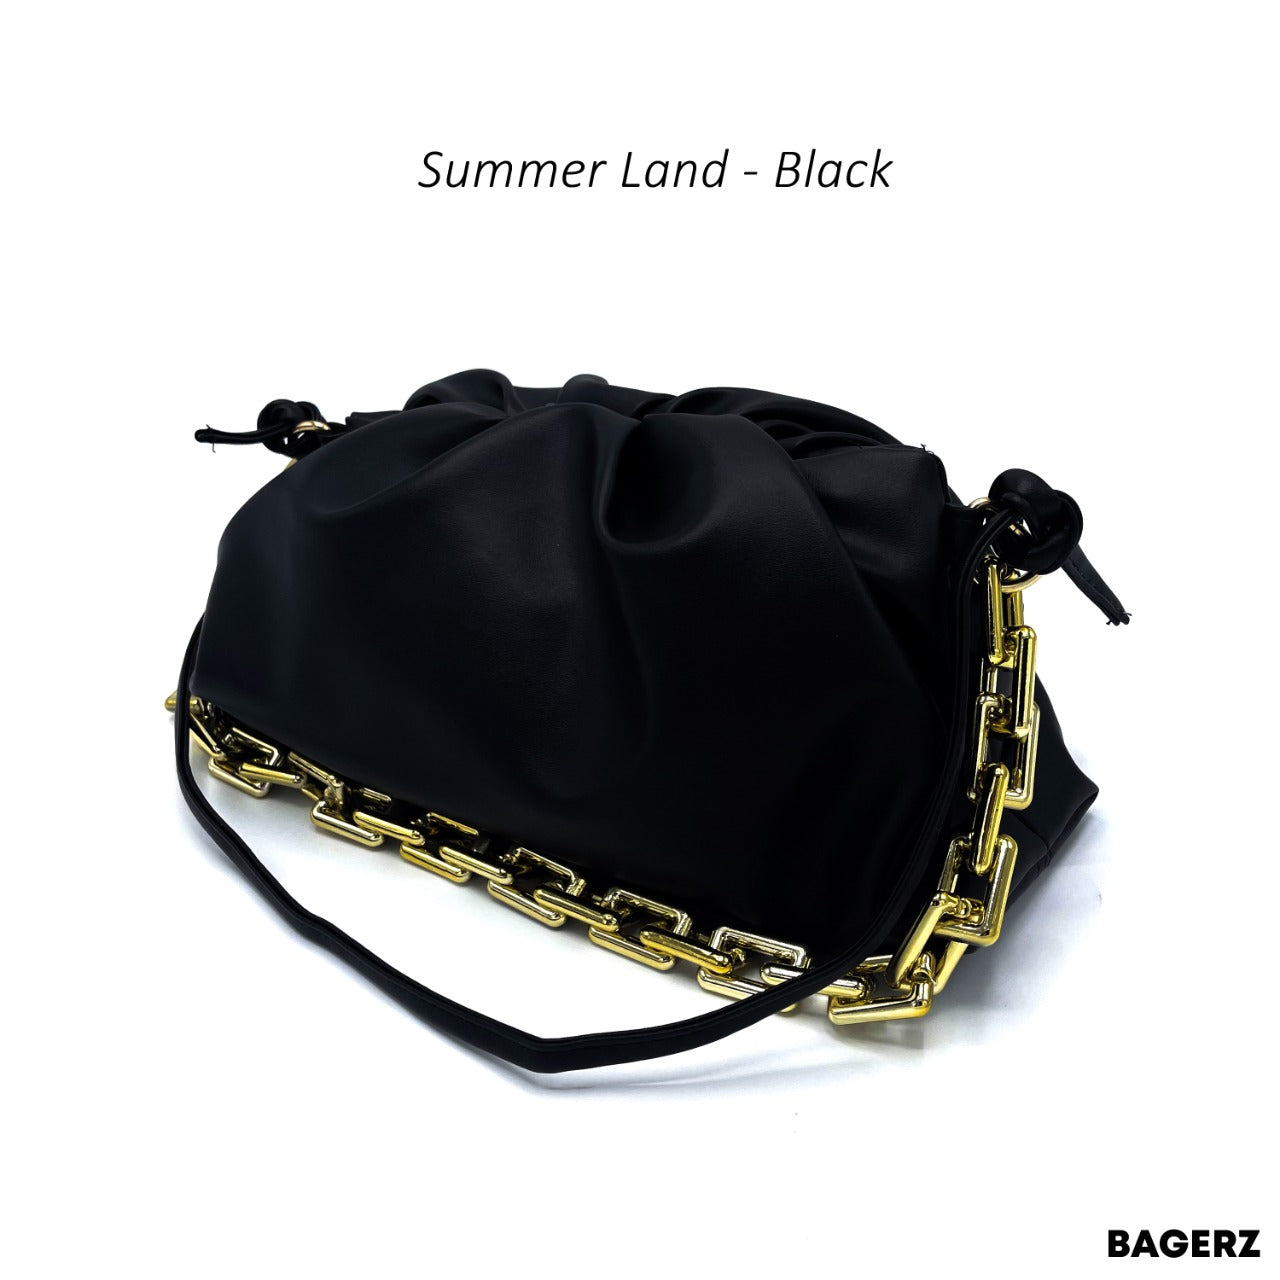 Summer Land - Black